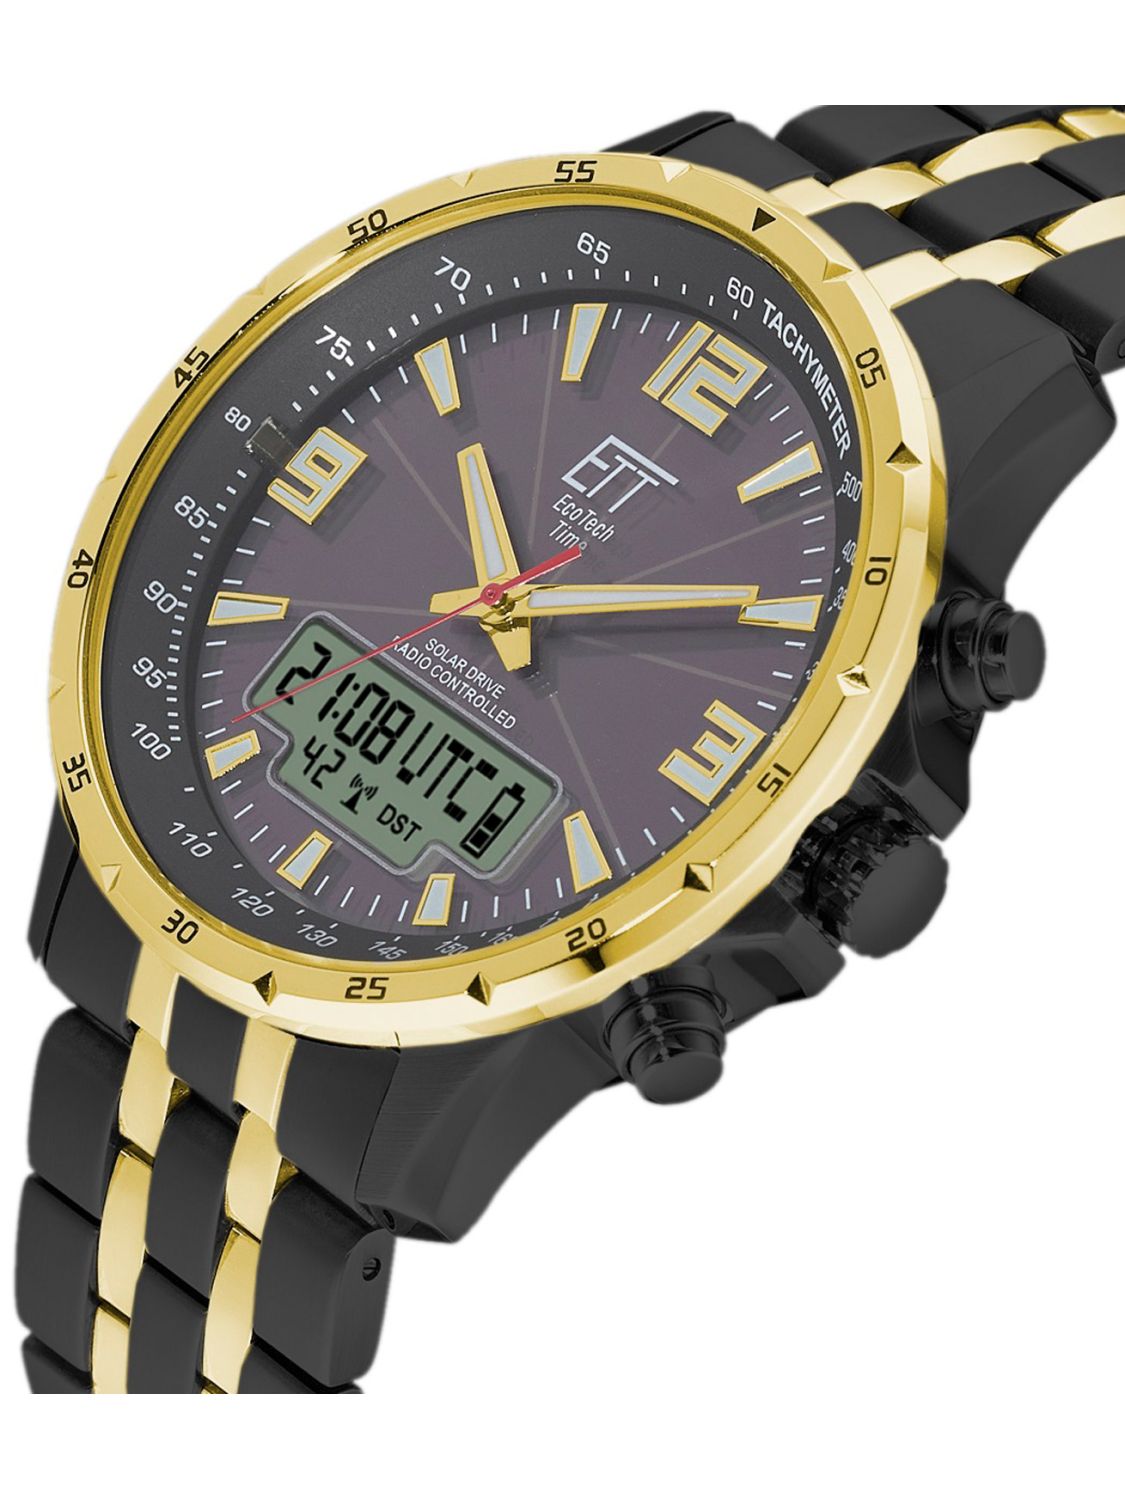 ETT Eco Black/Gold Time Radio-Controlled Arctica uhrcenter Men\'s • Solar Watch EGS-11567-21M Tech